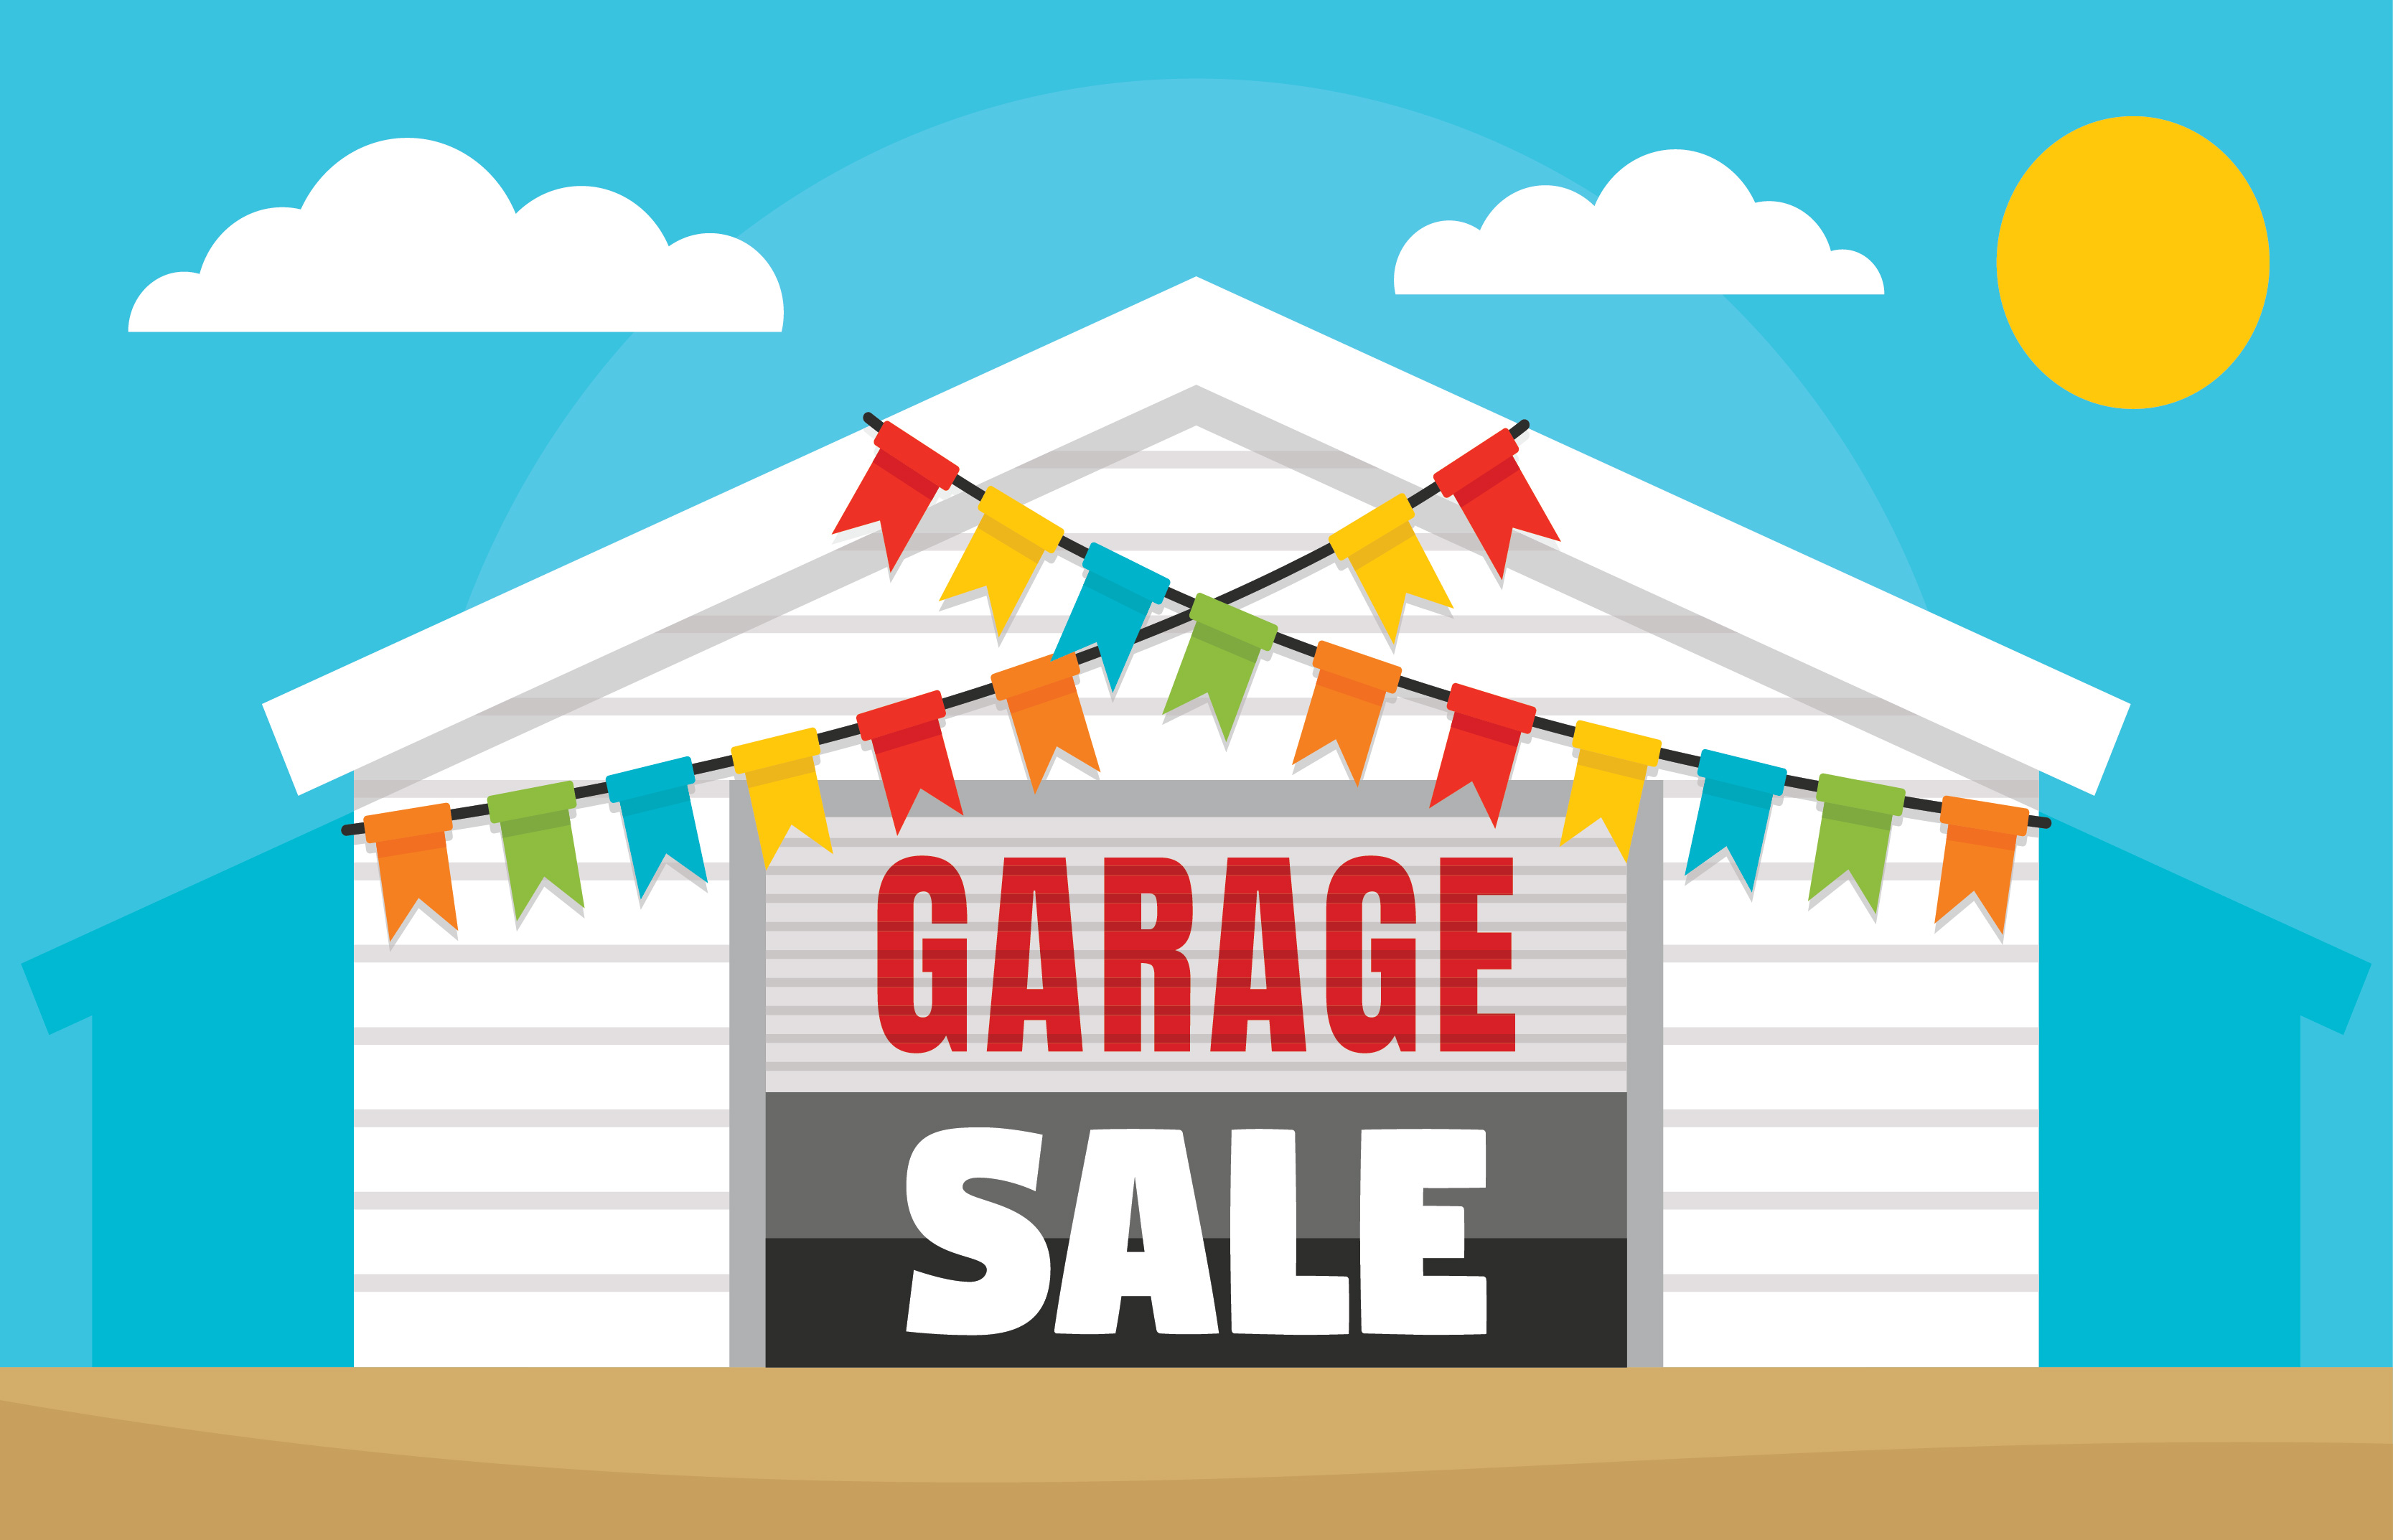 Seven Meadows Fall Garage Sale Set for October 14